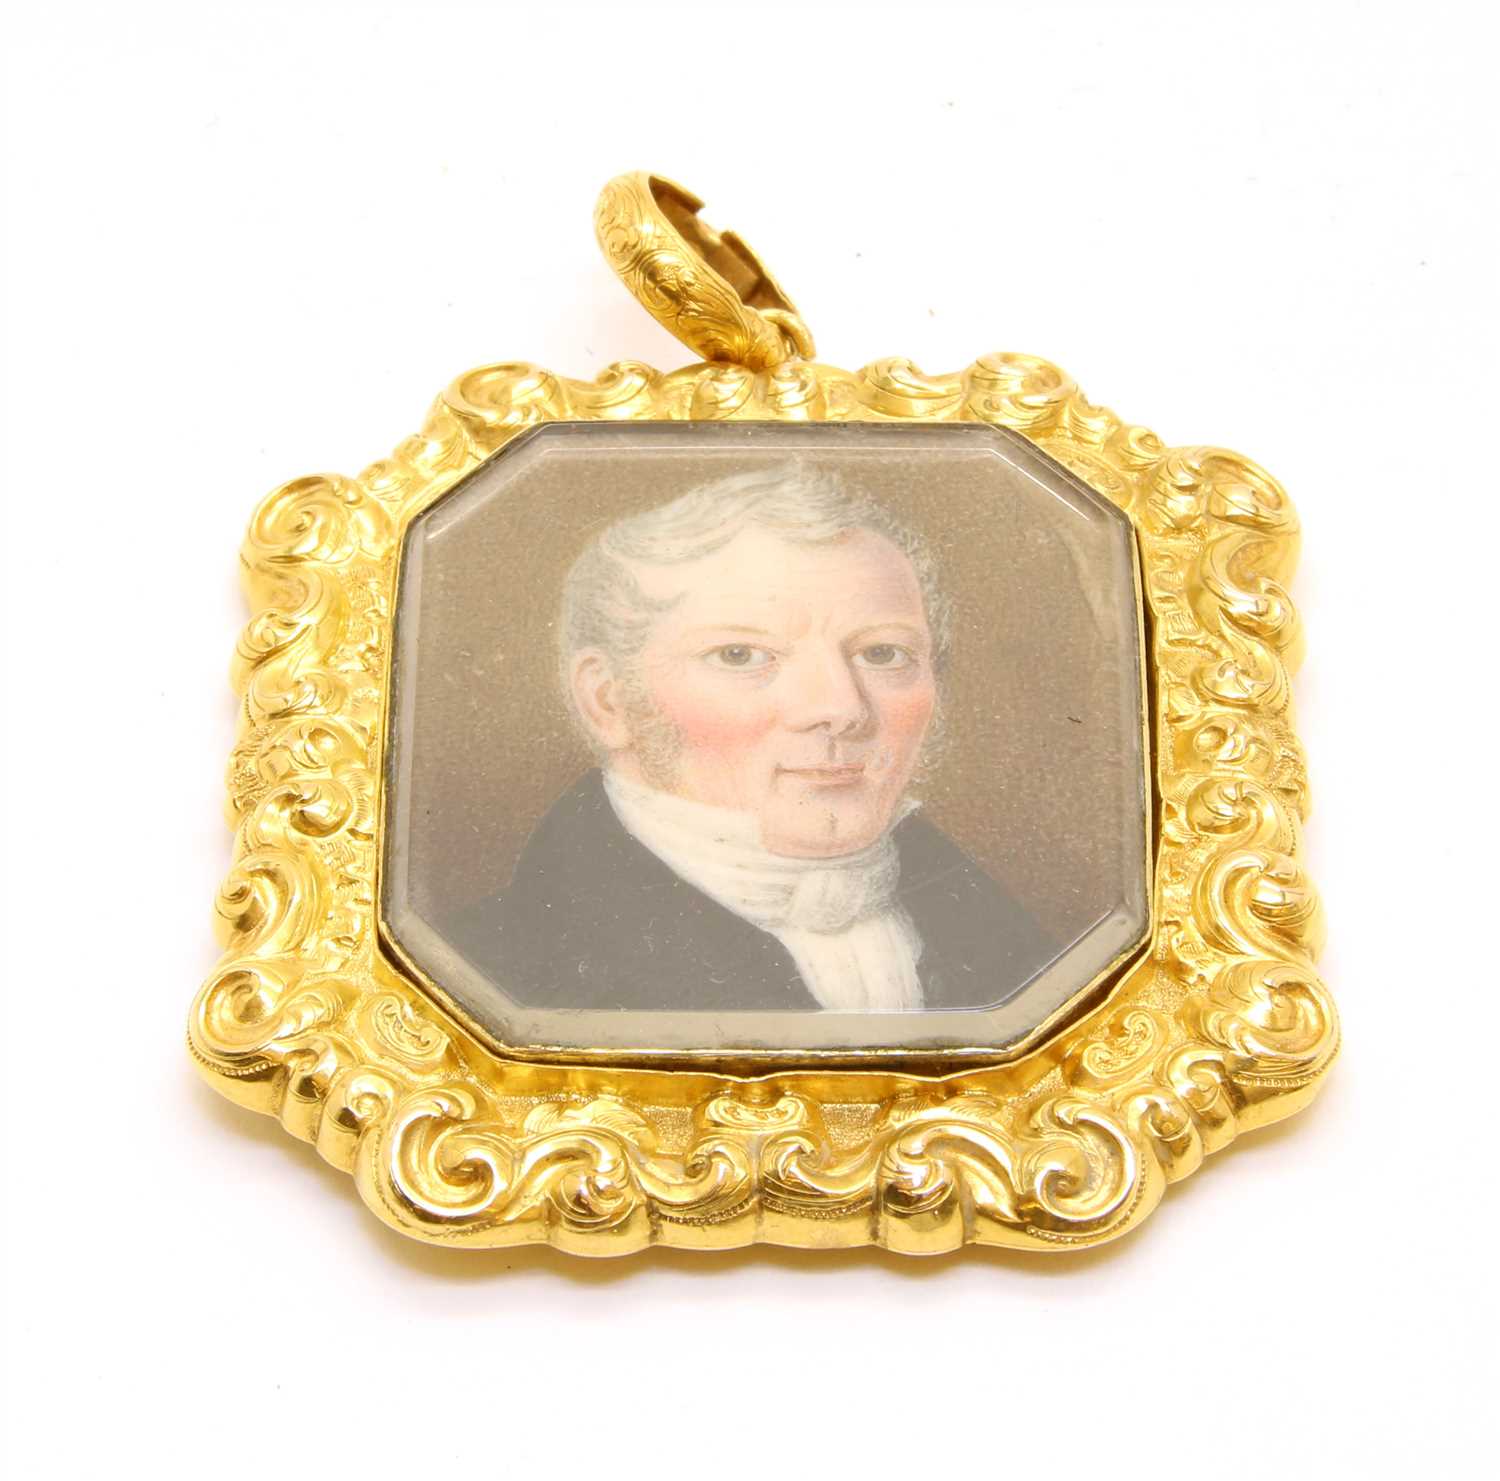 Lot 32 - A 19th Century portrait miniature of a gentleman